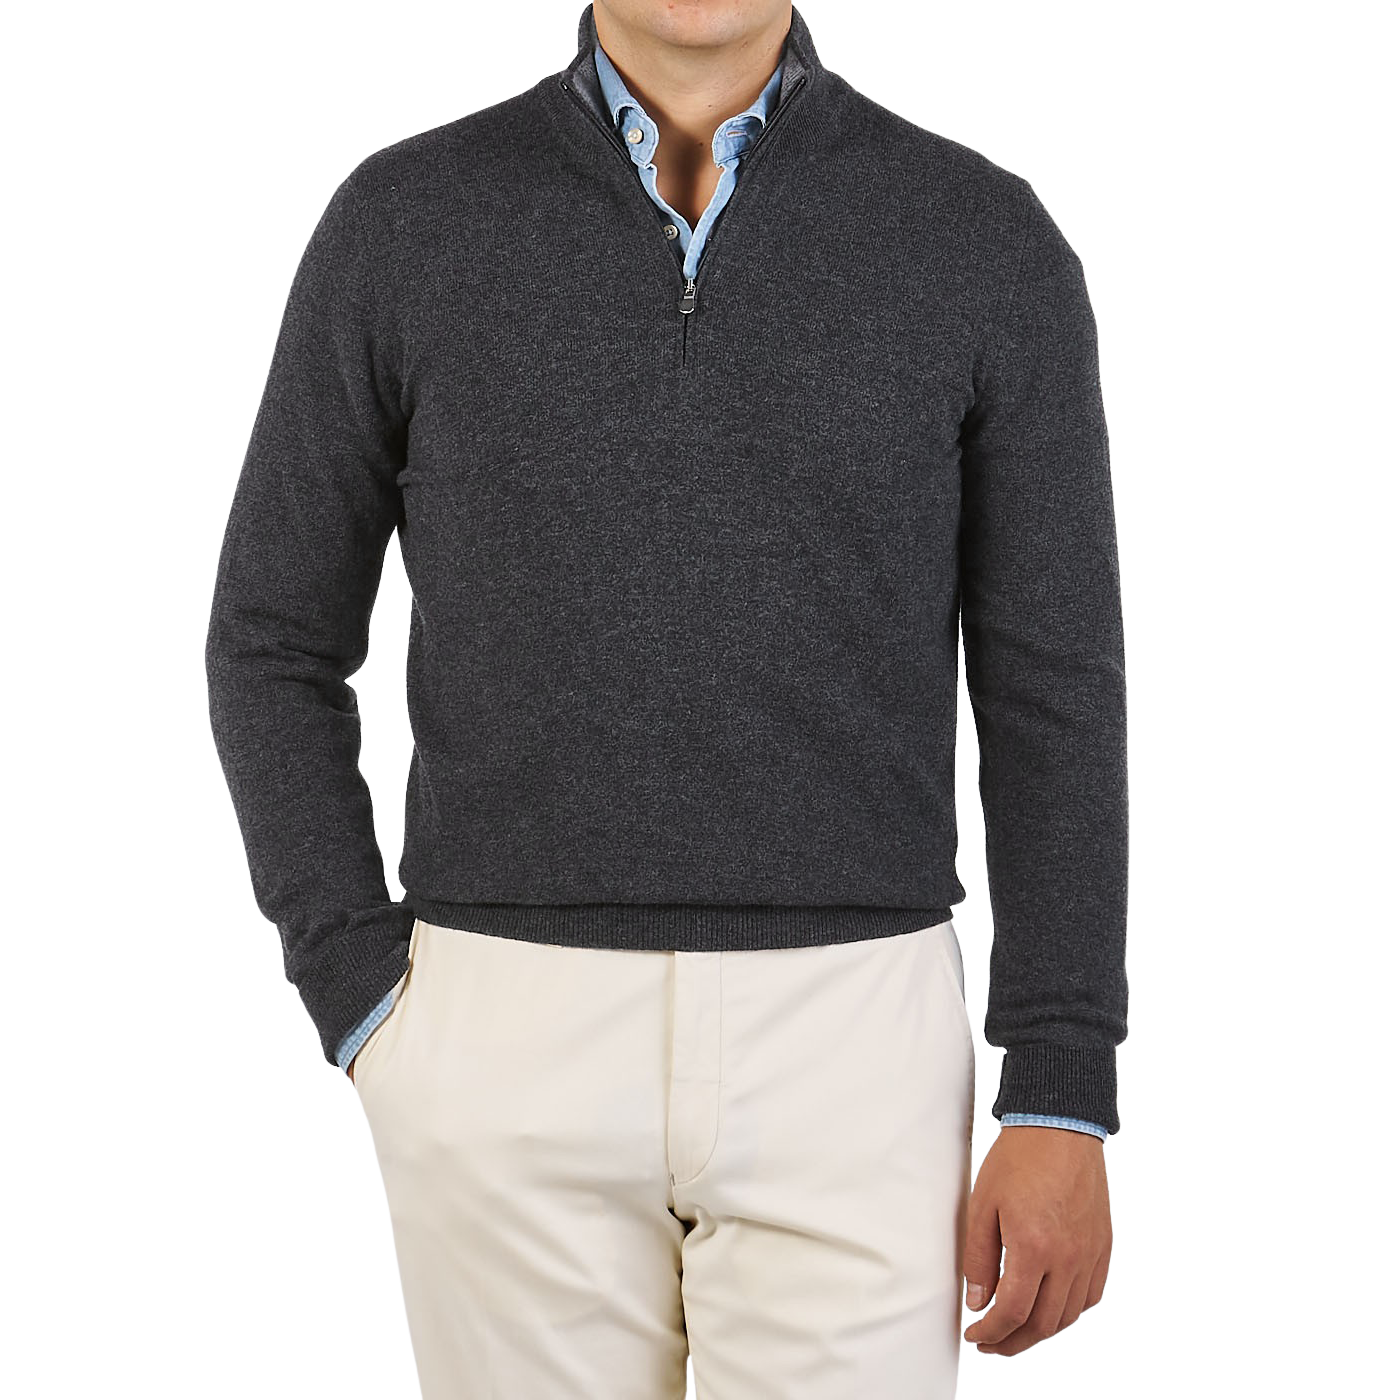 Gran Sasso Charcoal Grey Wool Cashmere 1:4 Zip Sweater1